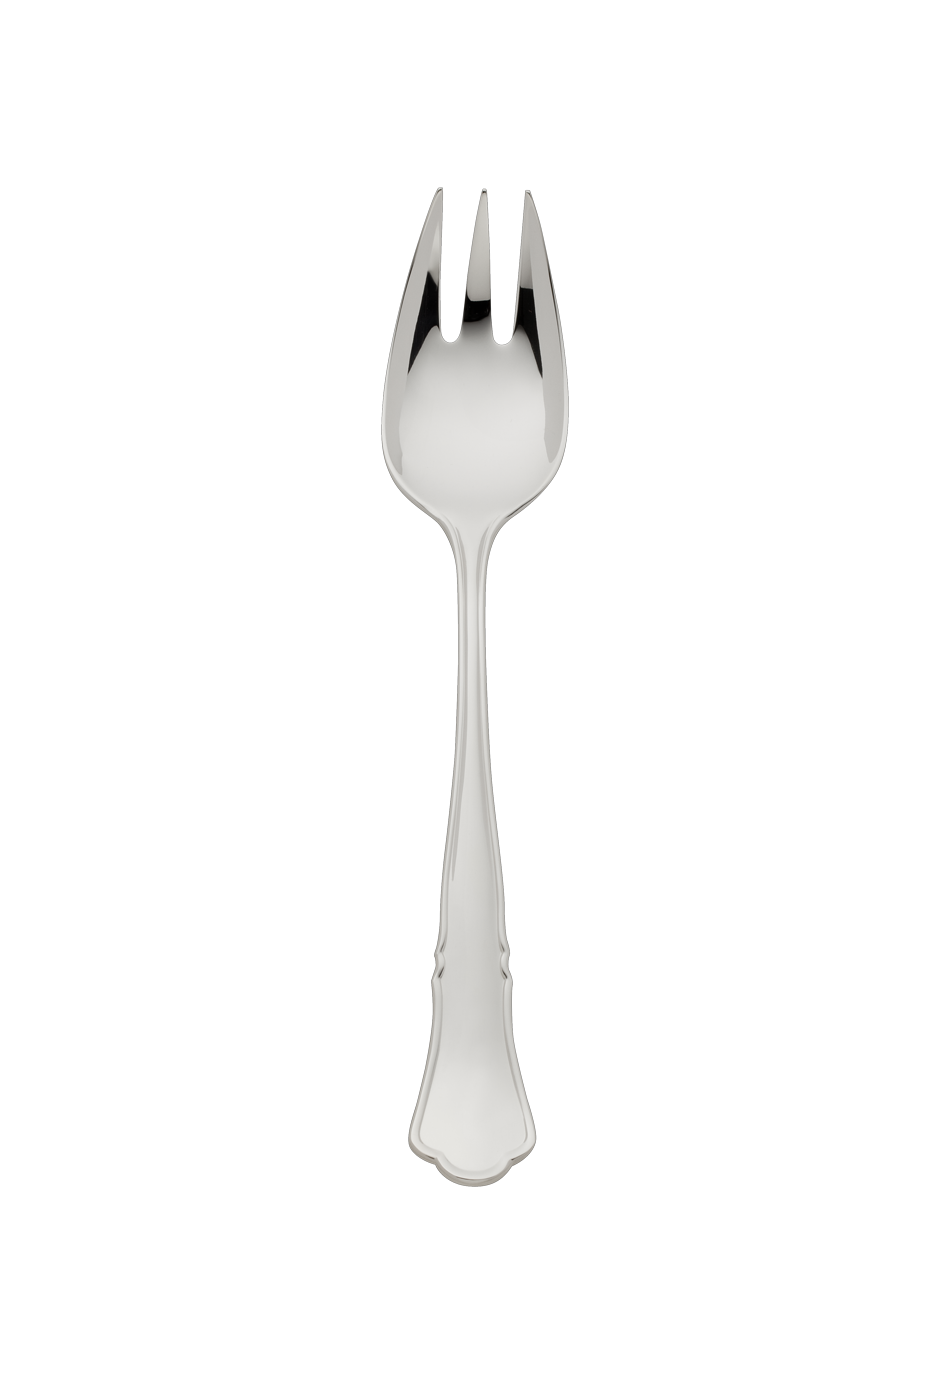 Alt-Chippendale Vegetable Fork (150g massive silverplated)